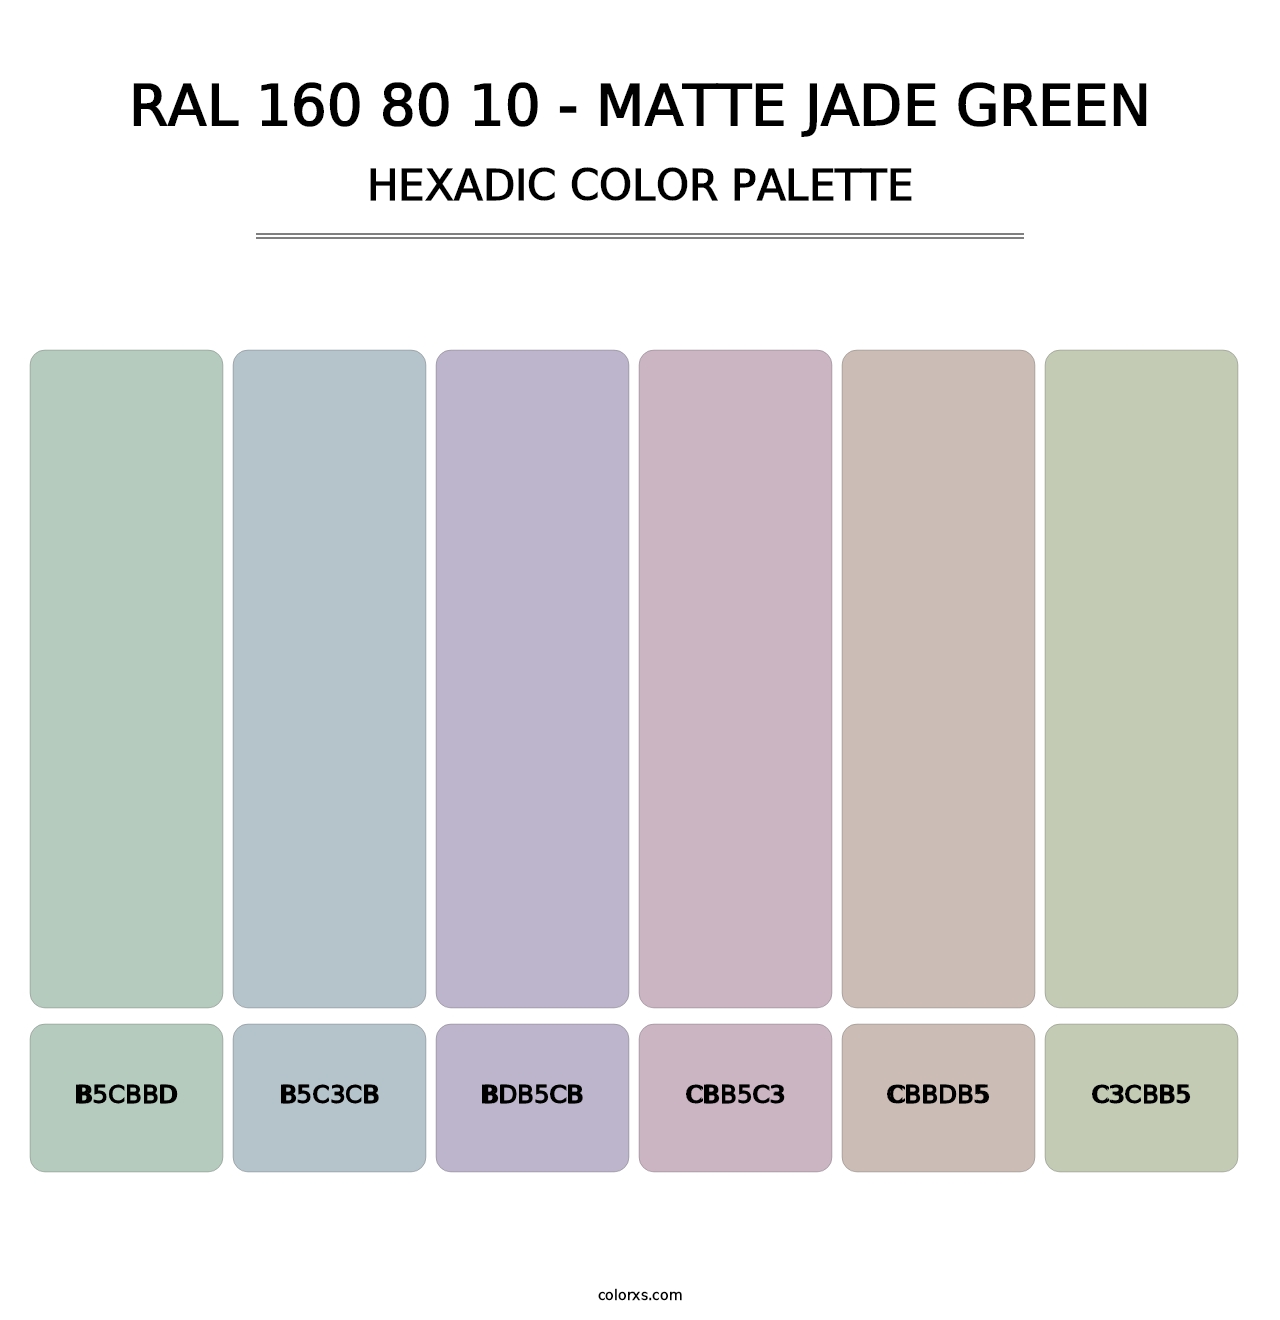 RAL 160 80 10 - Matte Jade Green - Hexadic Color Palette